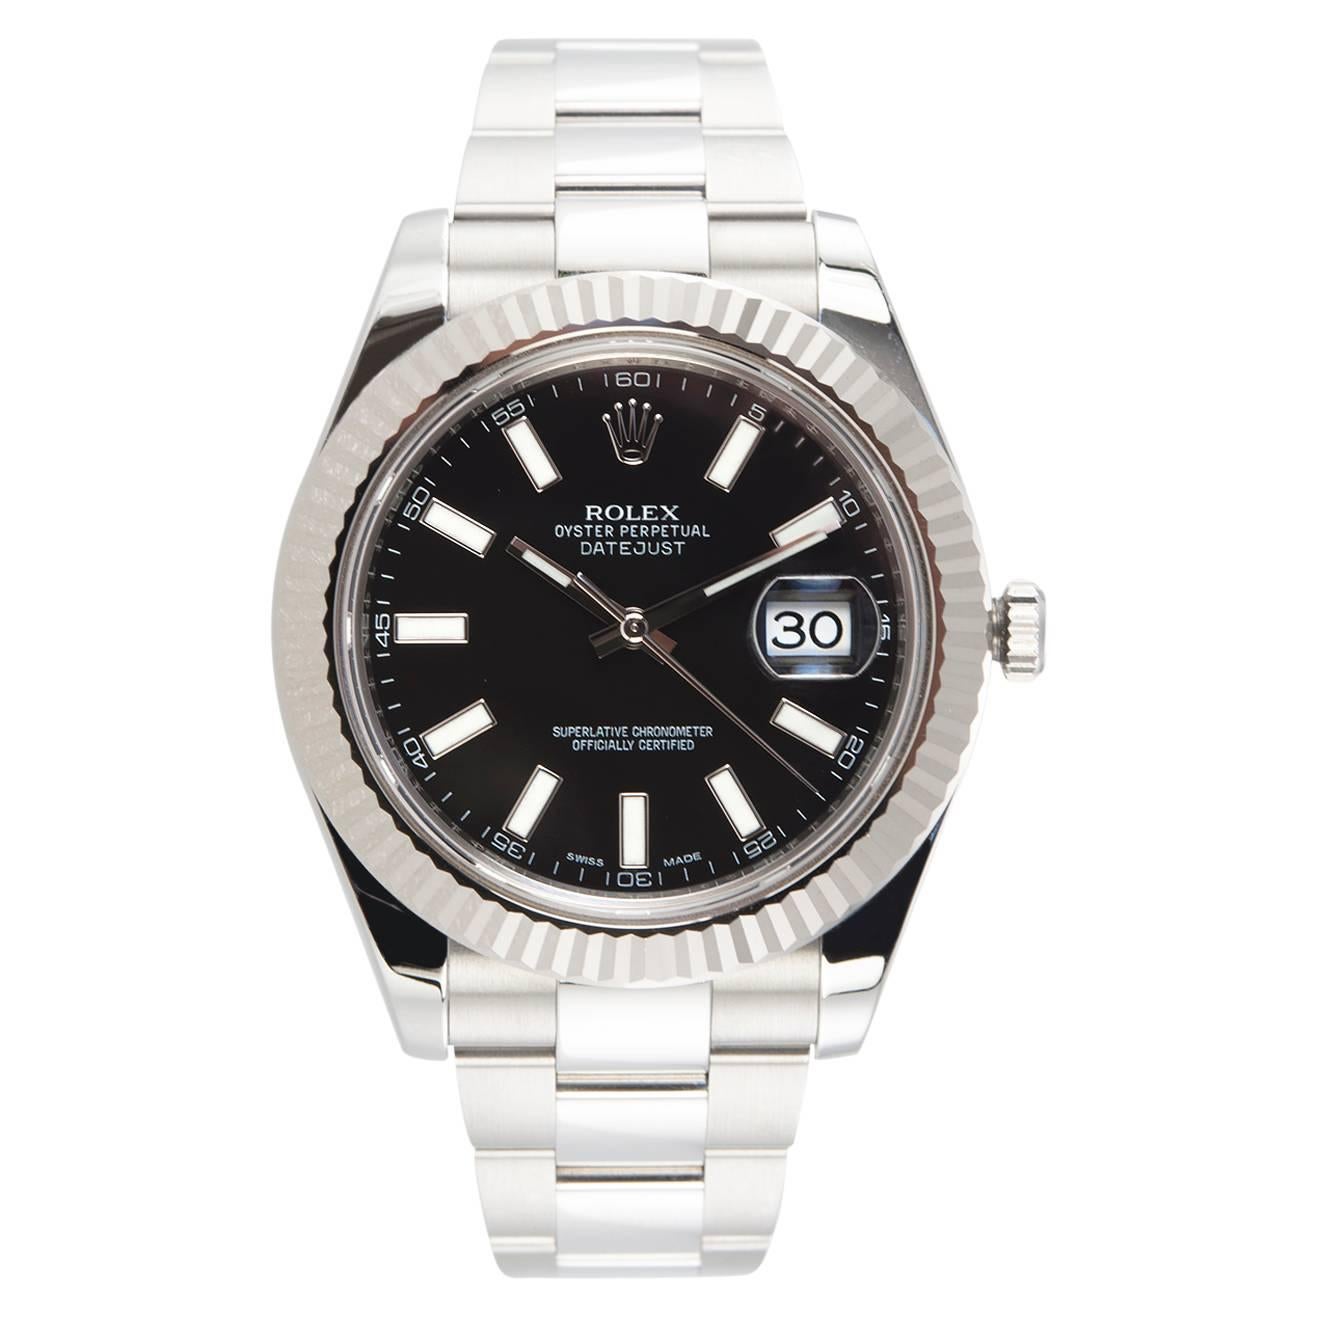 Rolex Stainless Steel Gold Fluted bezel DateJust II Wristwatch Ref 116334 For Sale